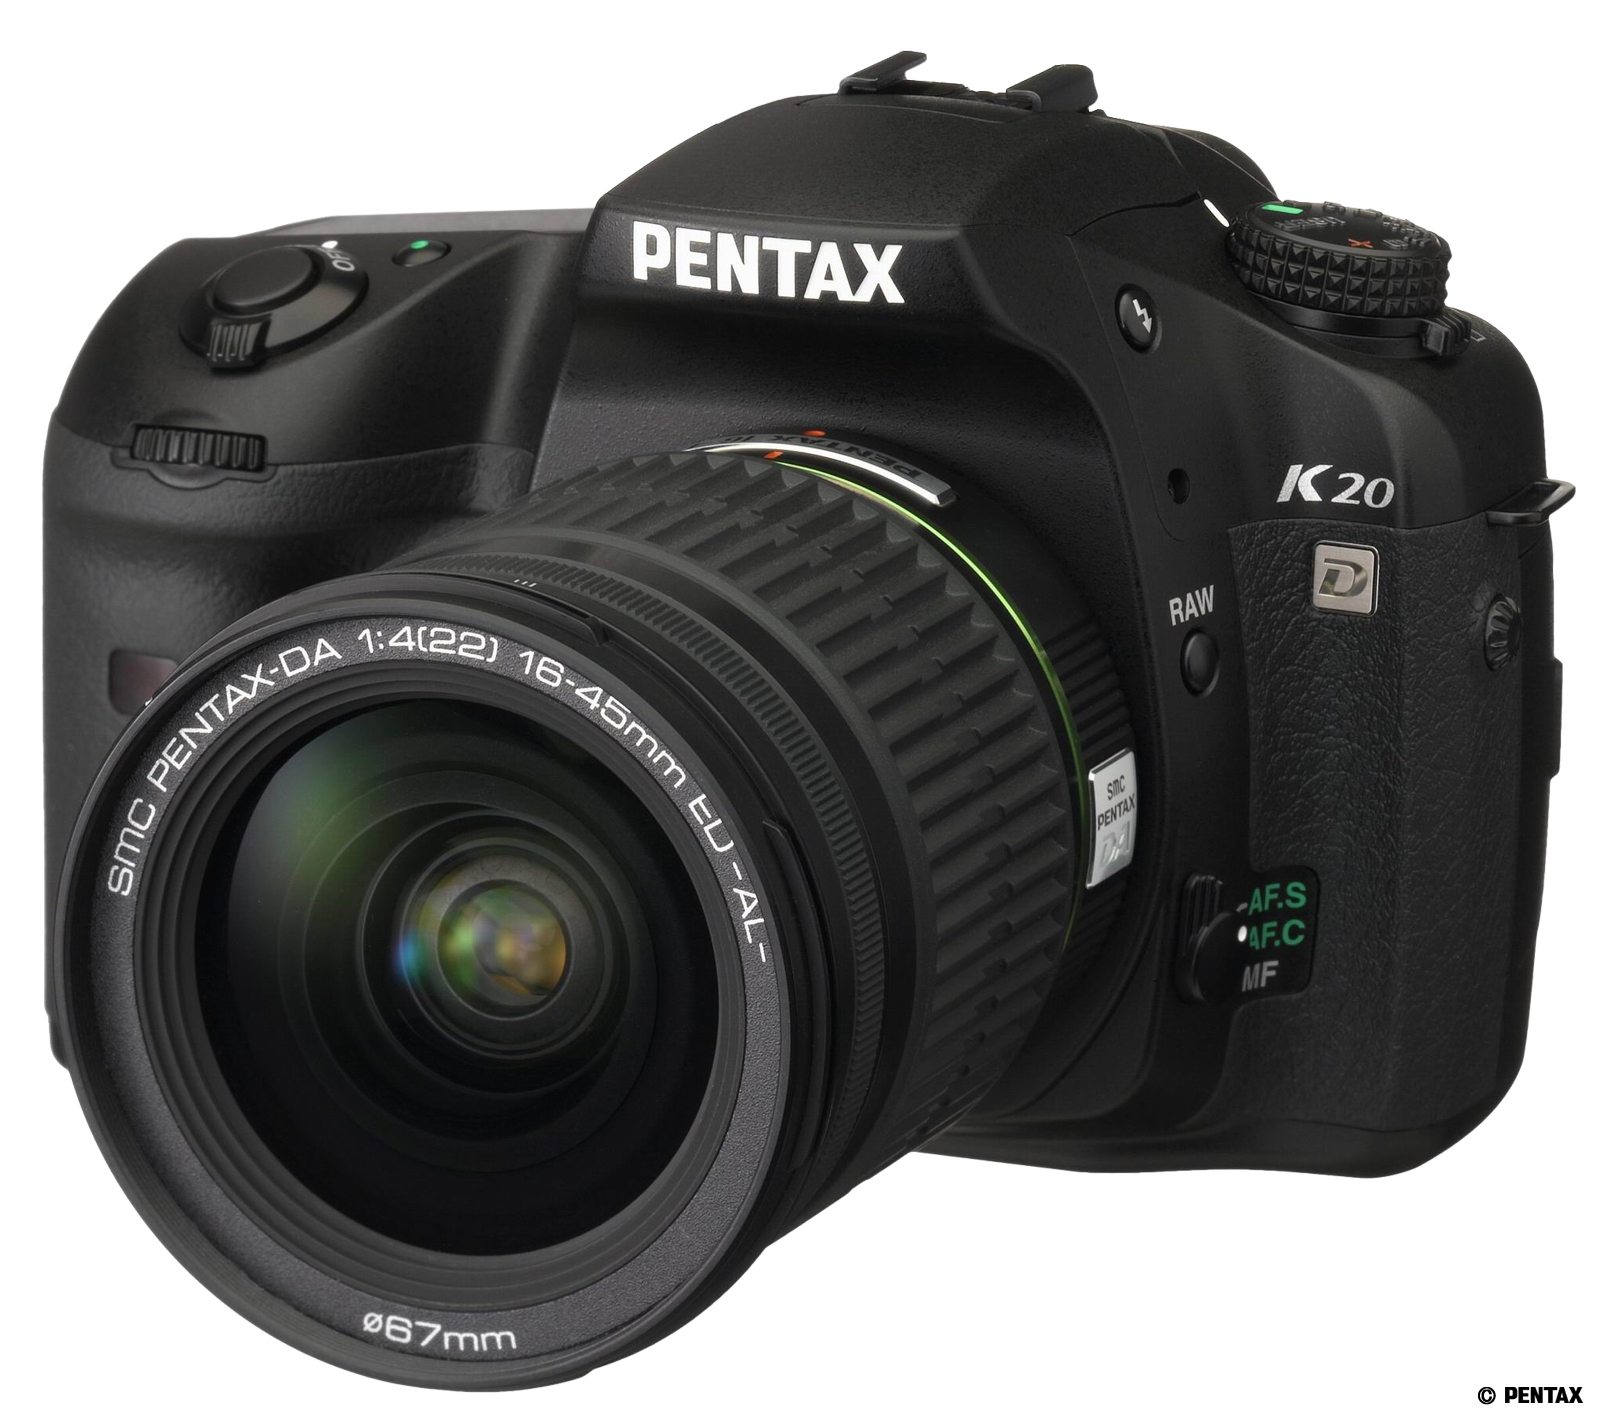 Pentax-K20D digital SLR